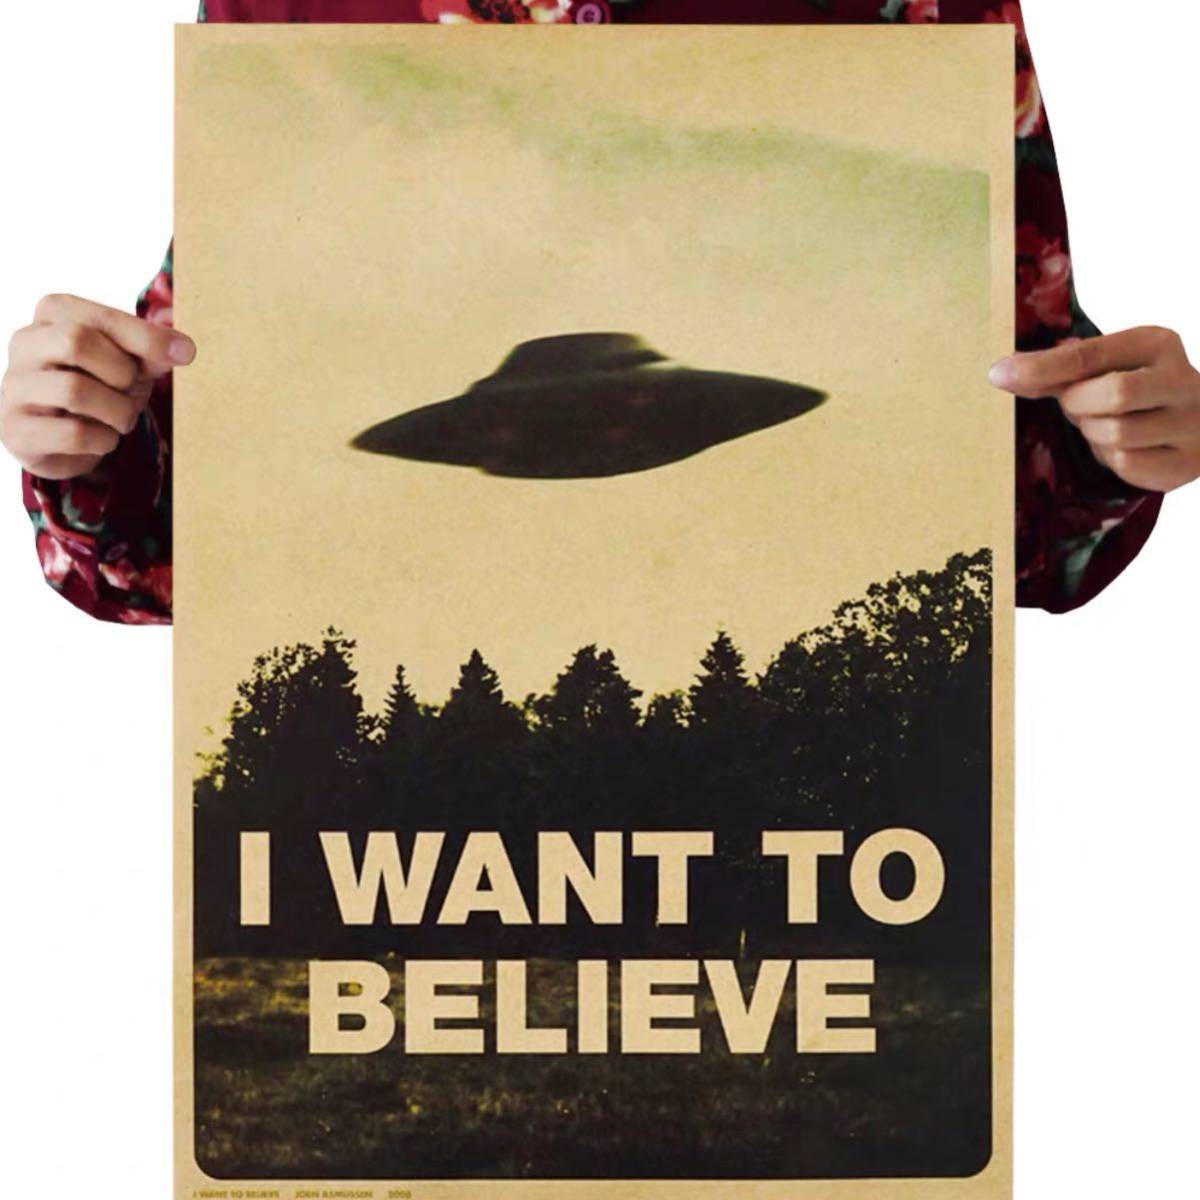 UFO extraterrestrial po starcraft paper made 